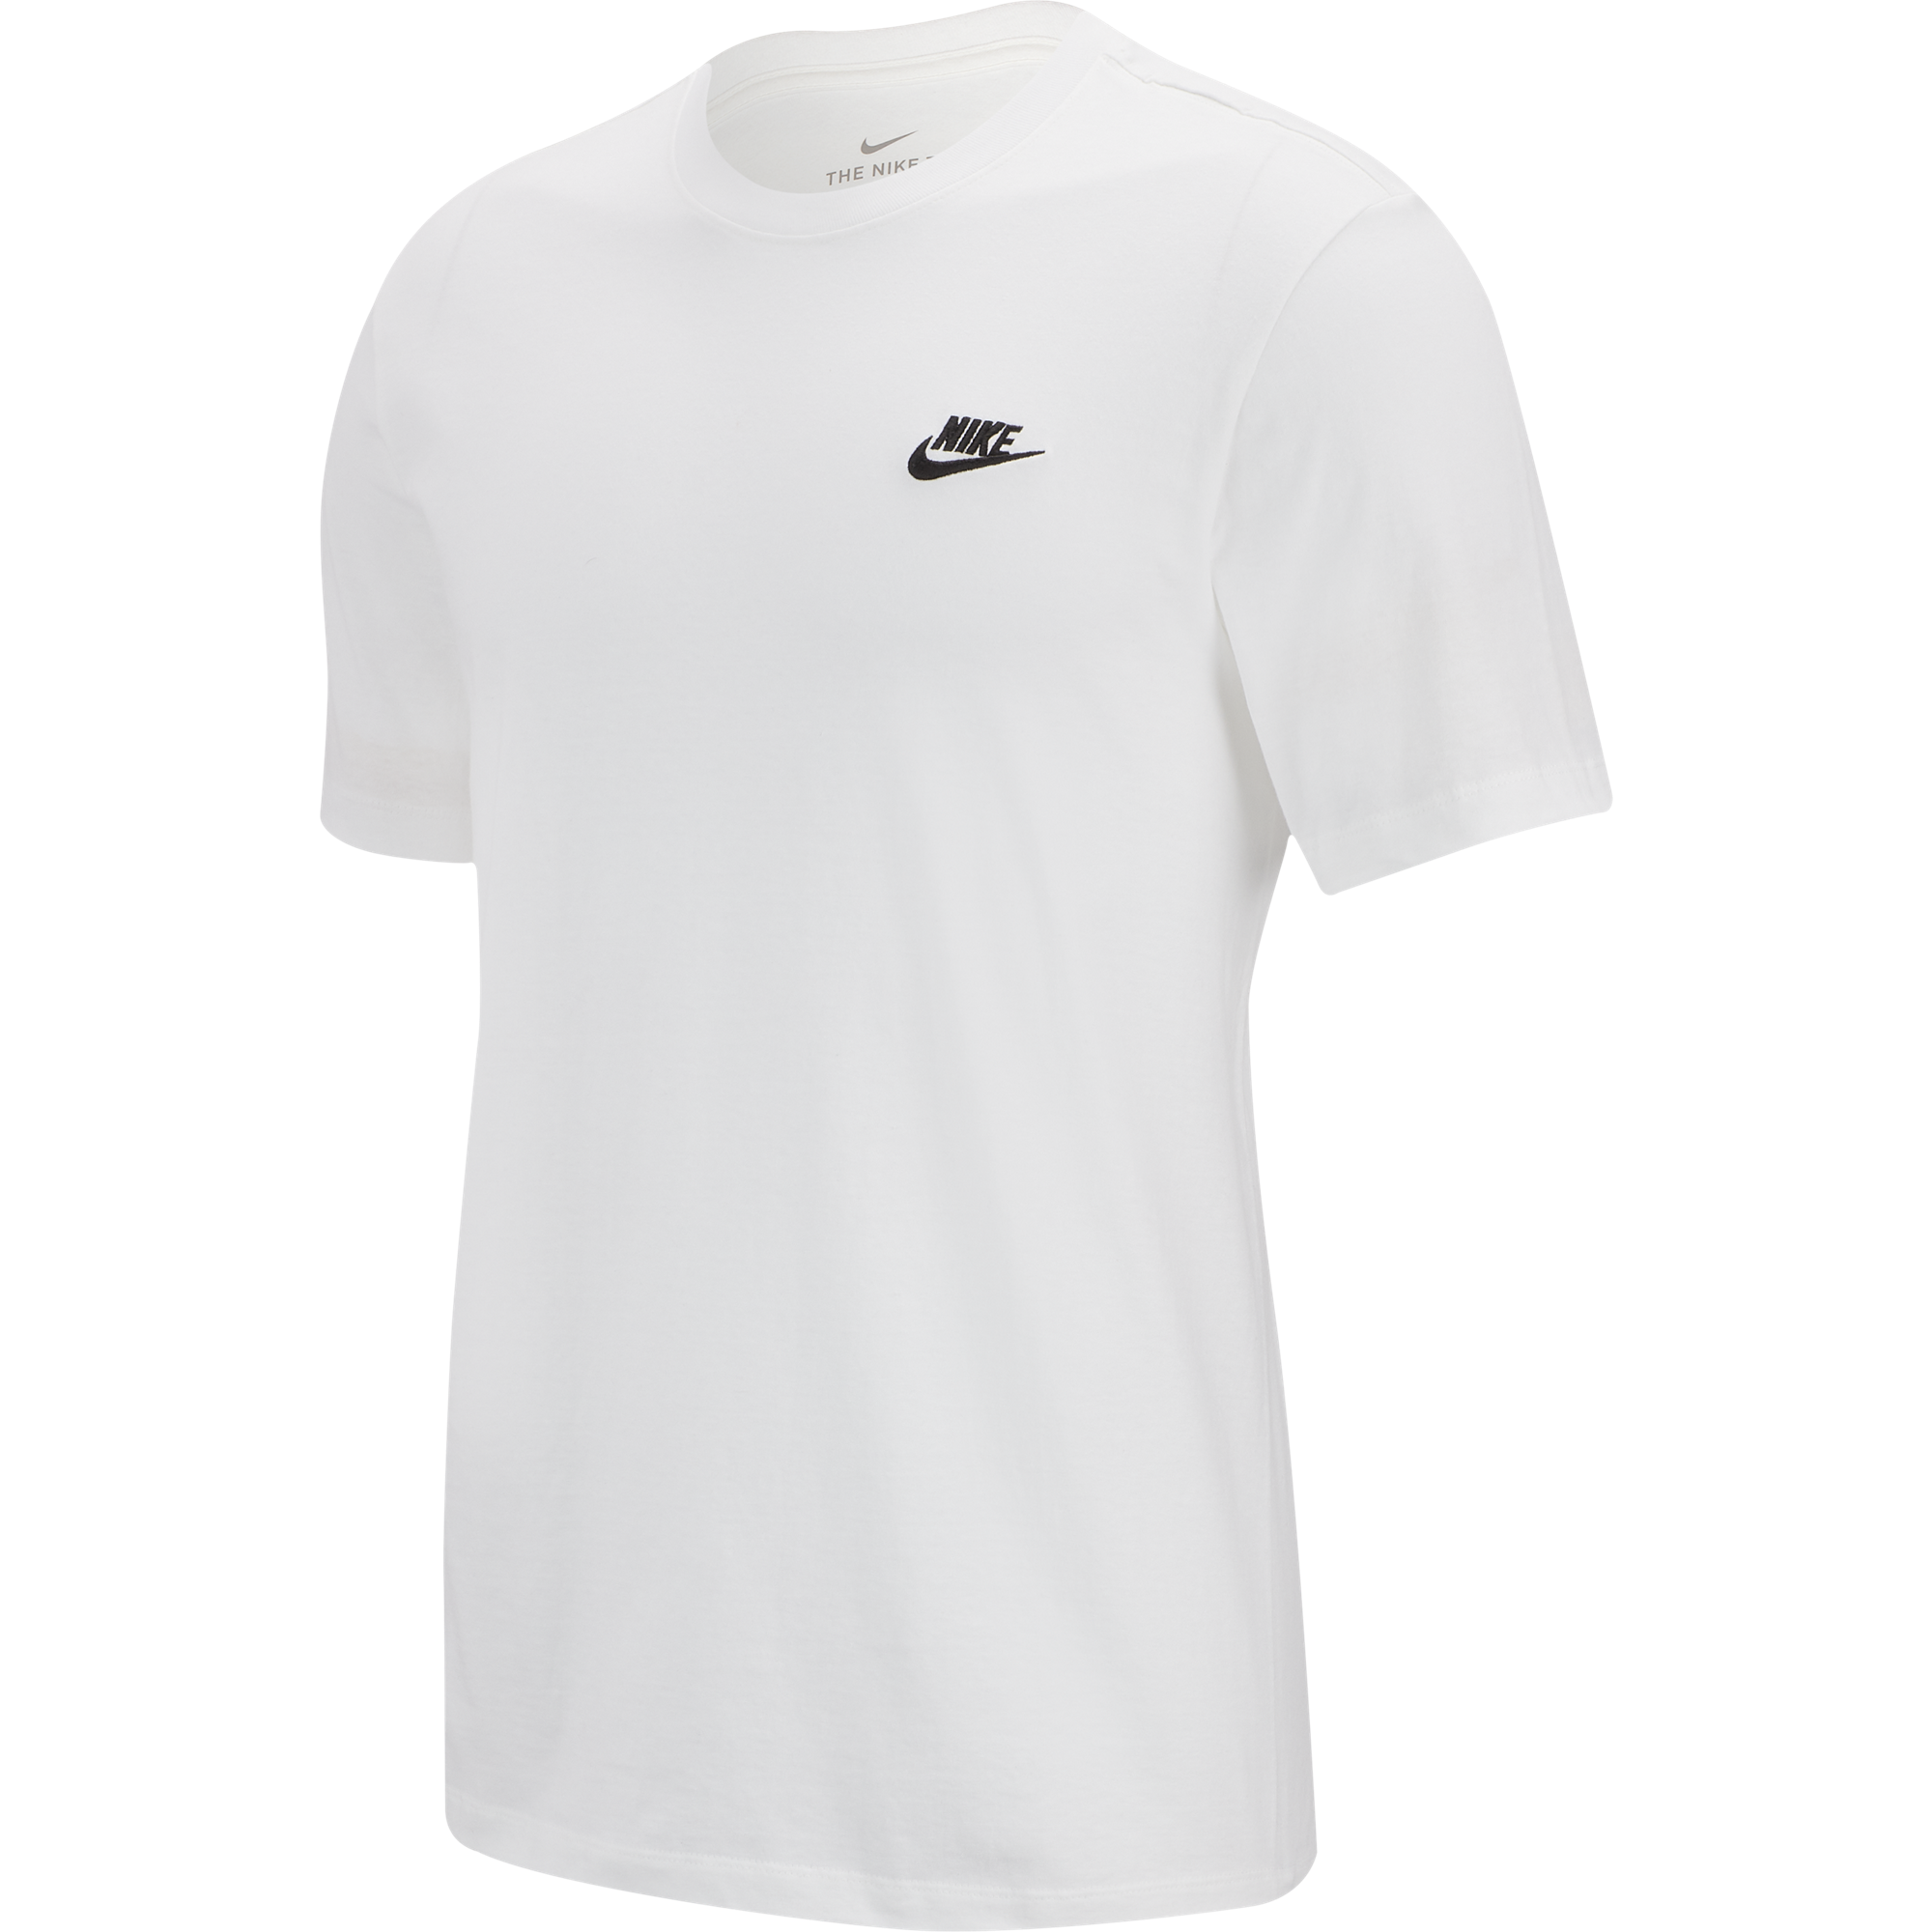 Nike Mens T-shirt White/Black AR4997-101 - Energy Store